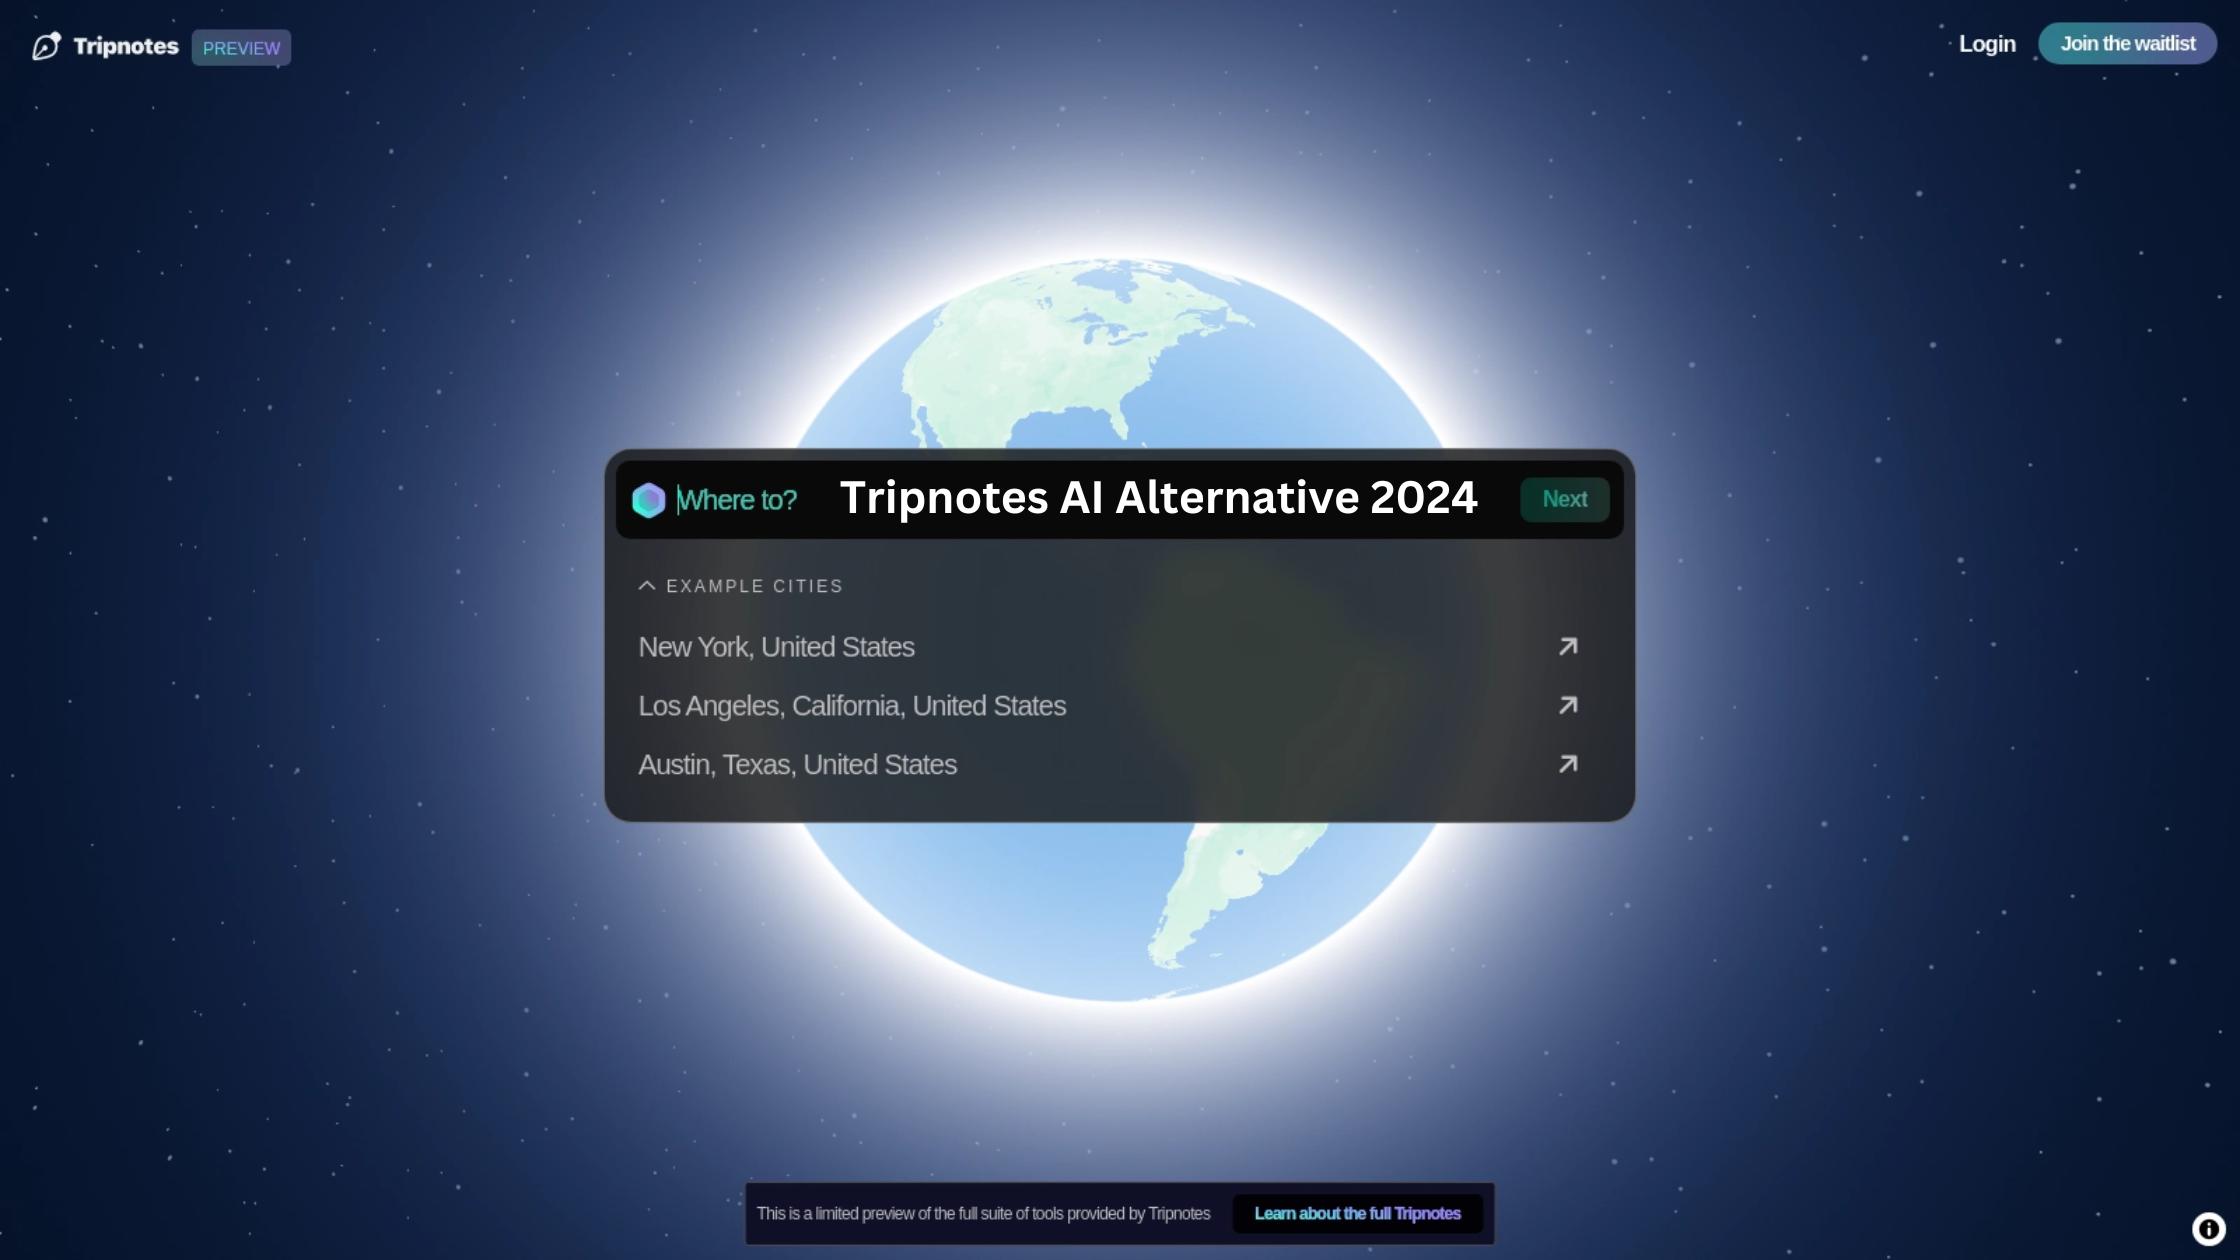 Tripnotes AI Alternative 2024